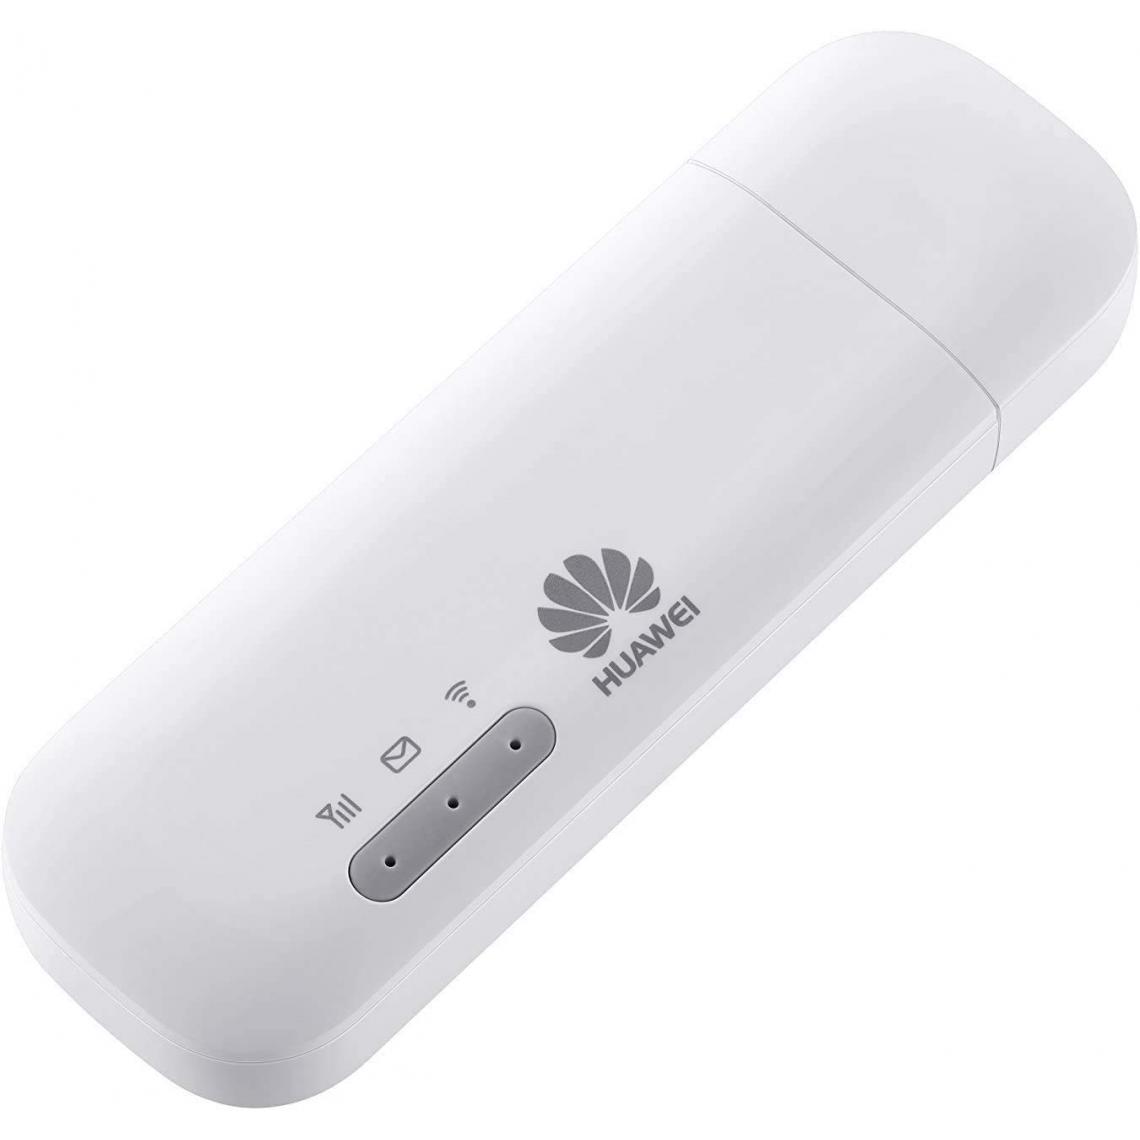 Chrono - HUAWEI E8372h-320 LTE/4G 150 Mbps USB Mobile Wi-Fi Dongle ï¼Blanc - Modem / Routeur / Points d'accès